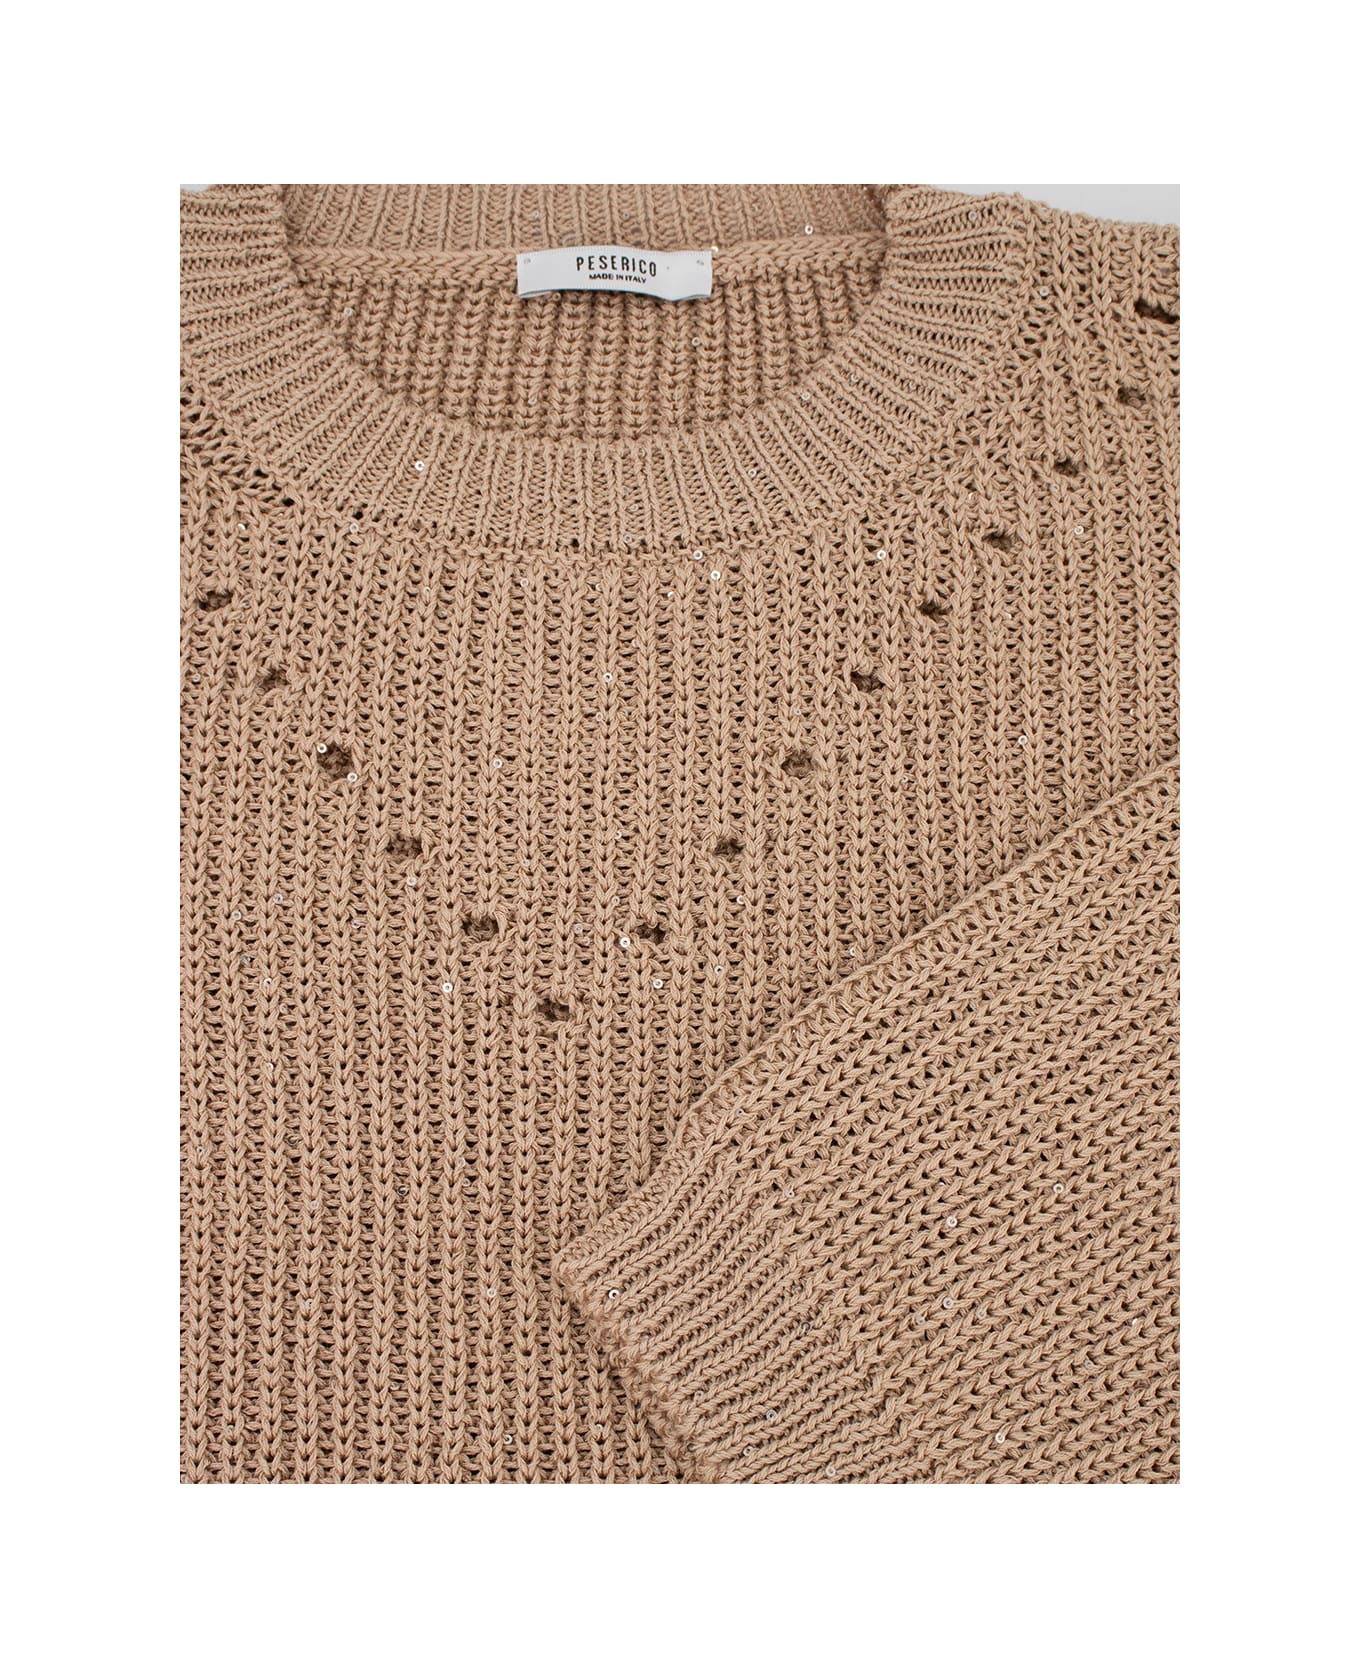 Peserico Sweater - CORDAME ニットウェア